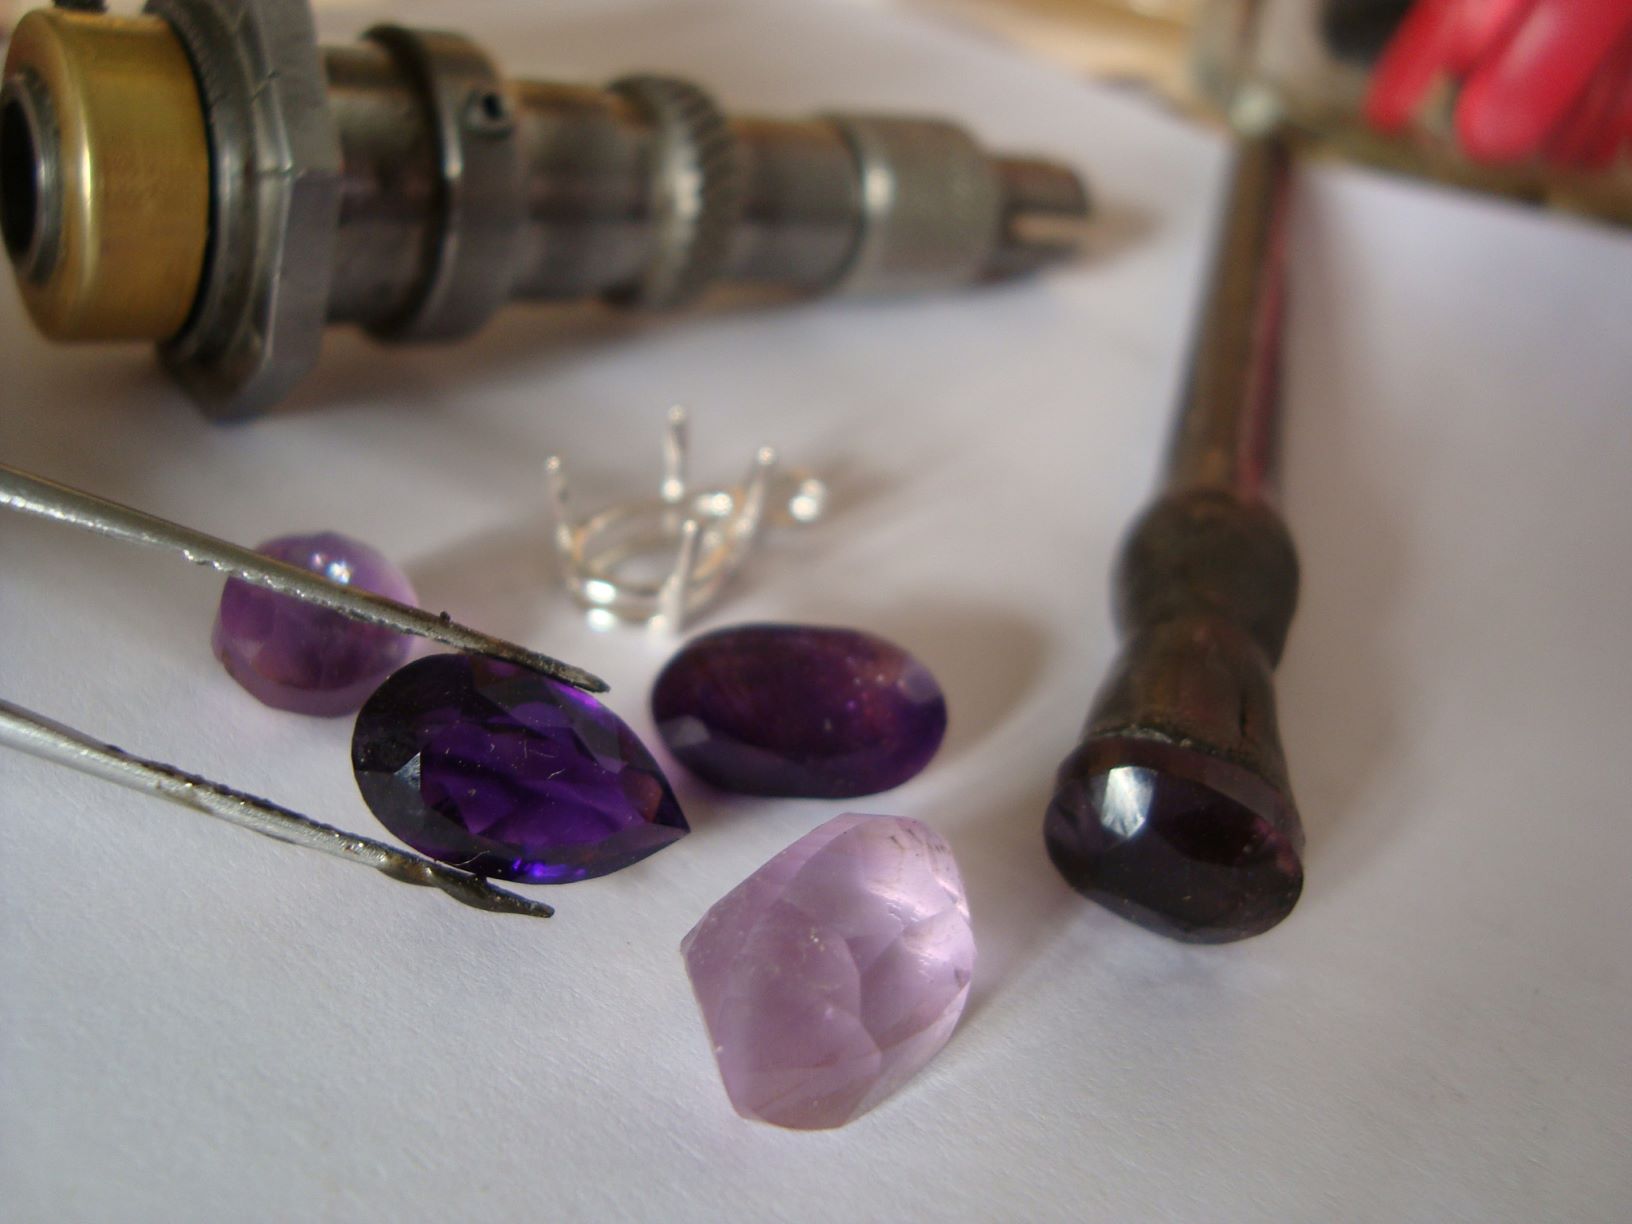 The lapidary’s work : faceting of amethyst gemstones.